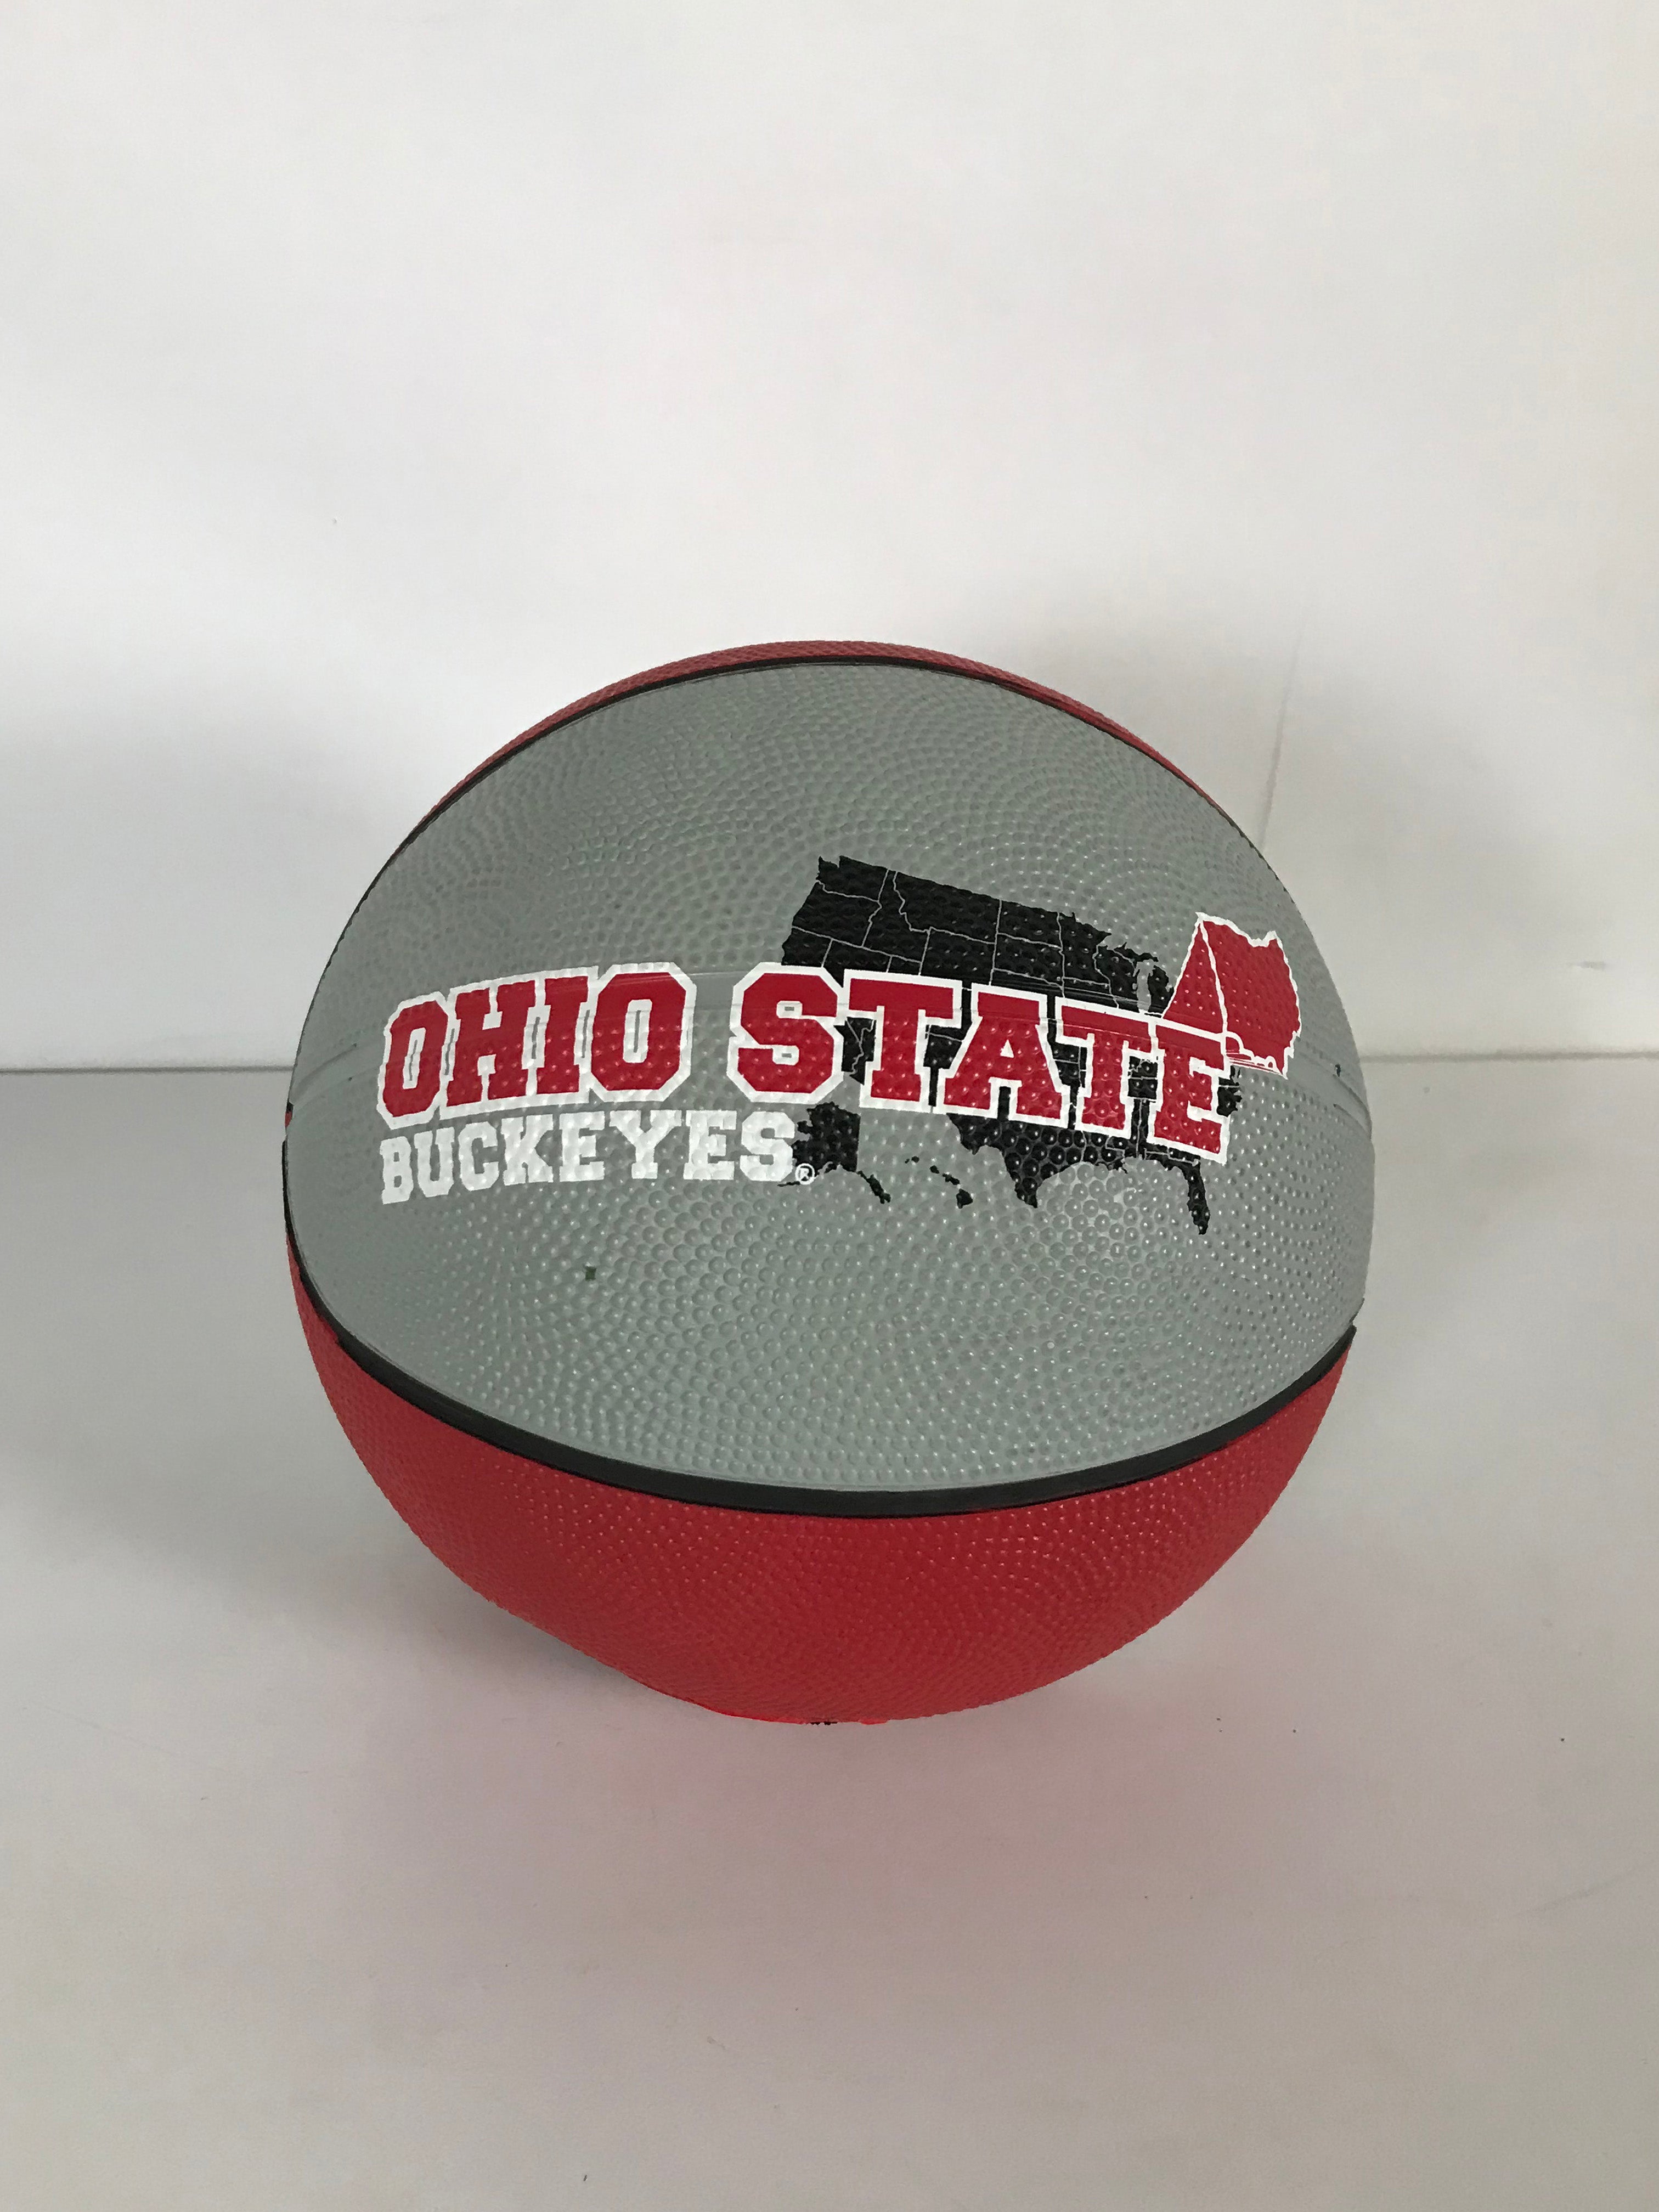 Baden 7" Rubber Ohio State University Basketball